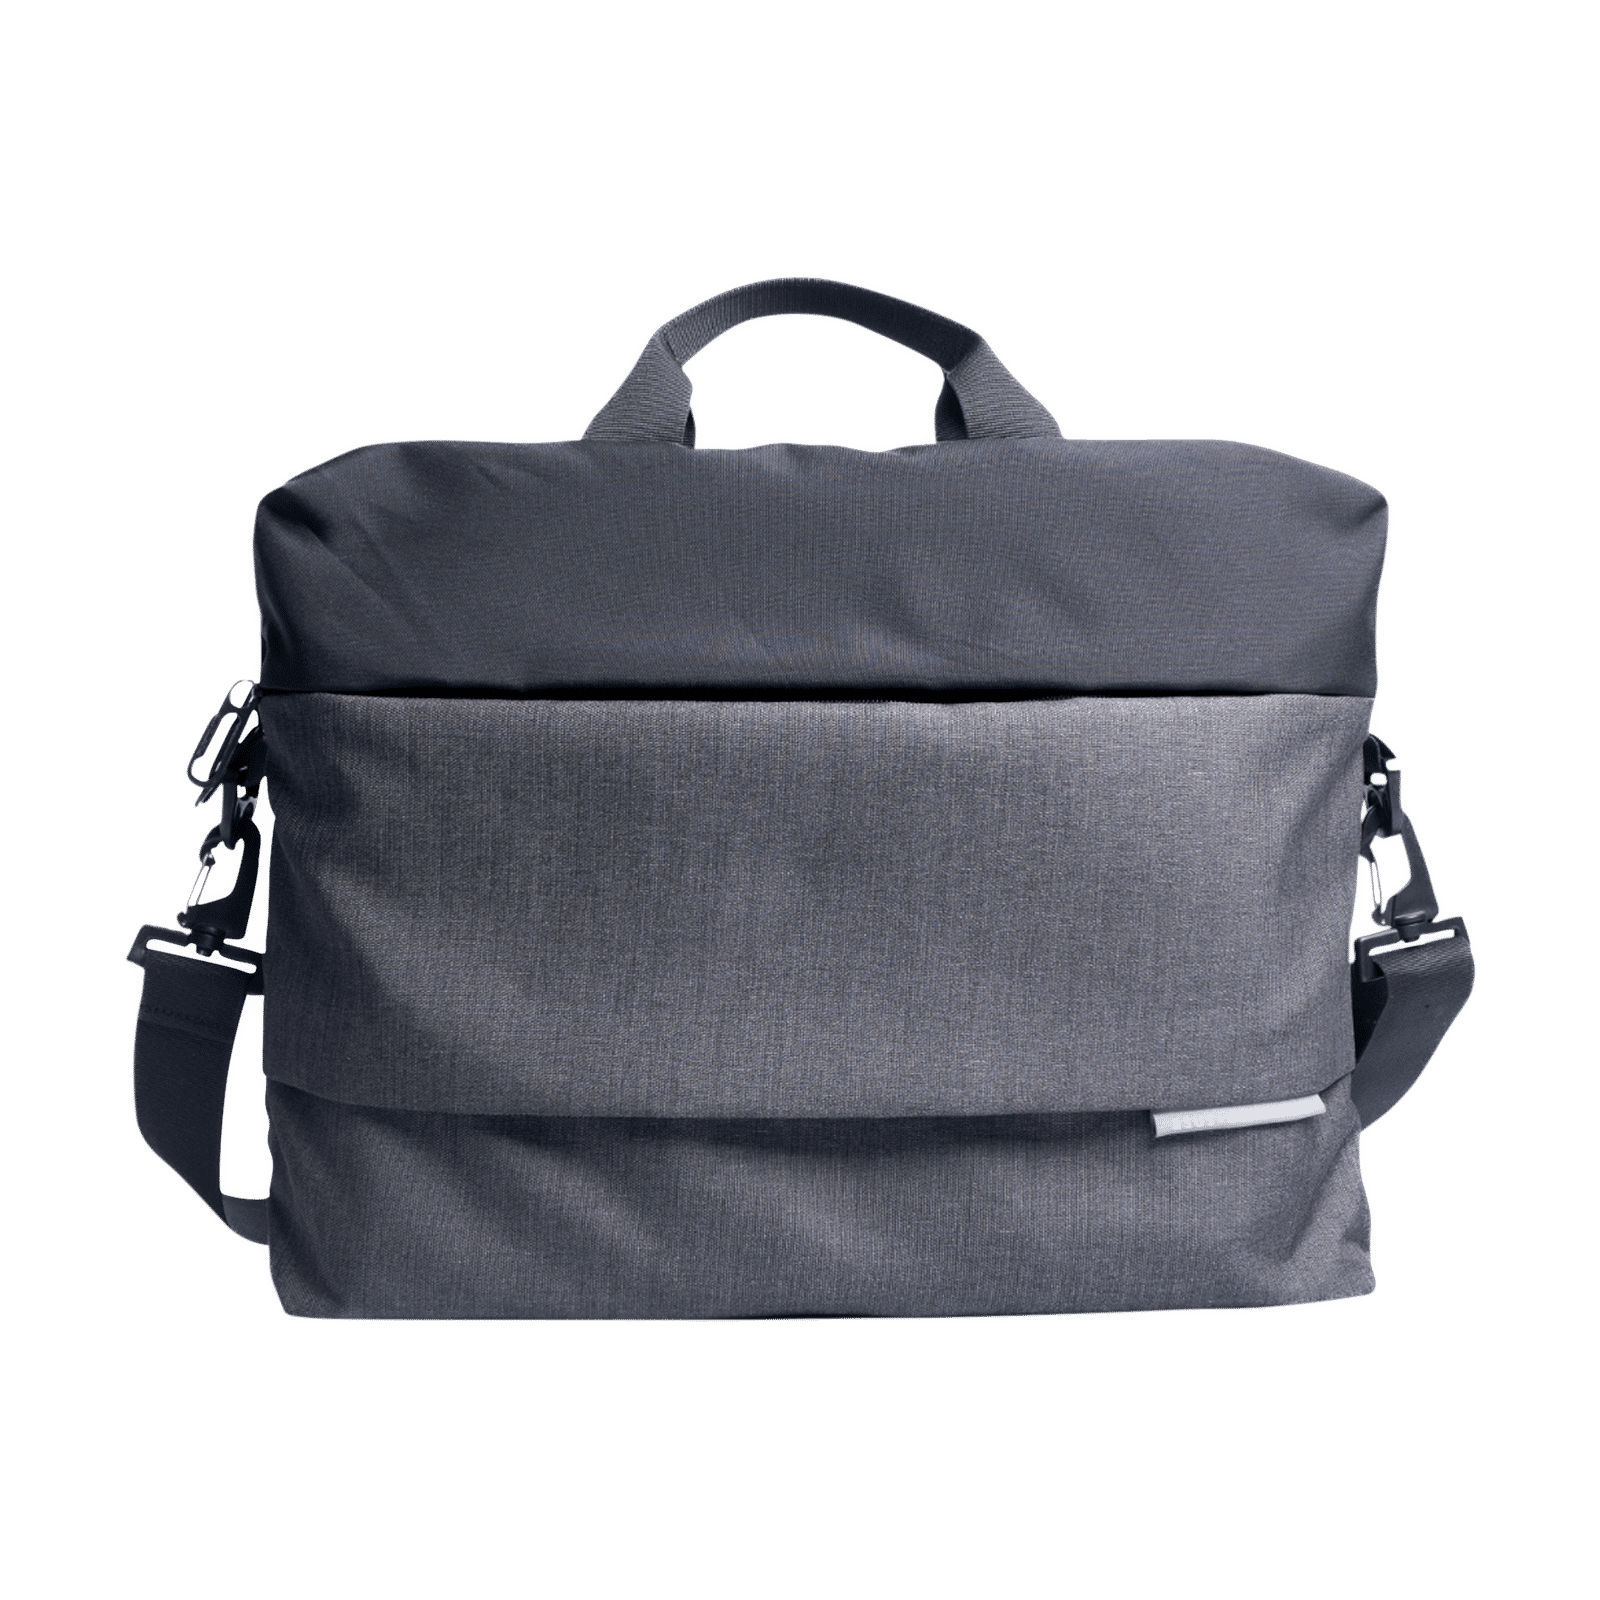 Amazon.com: DOMISO 15-15.6 Inch Laptop Sleeve Bag Water Resistant Briefcase  Messenger Shoulder Bag for ThinkPad L580/16 MacBook Pro/IdeaPad 320/Dell  XPS 15/HP Envy x360/ASUS ROG Zephyrus/Acer Chromebook,Grey : Electronics